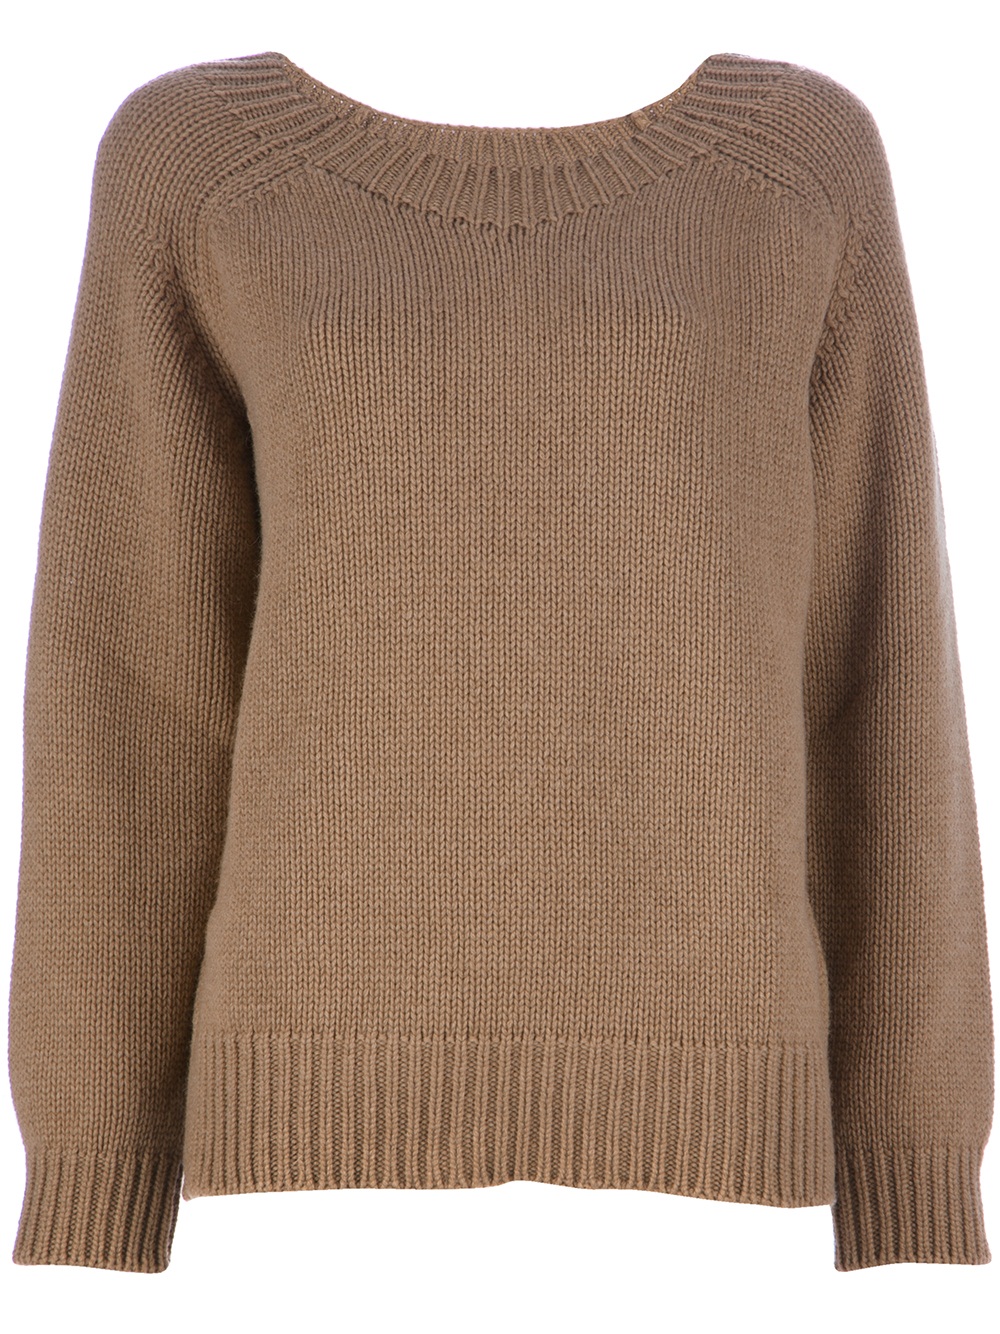 Jil Sander Camel Hair Sweater in Brown - Lyst